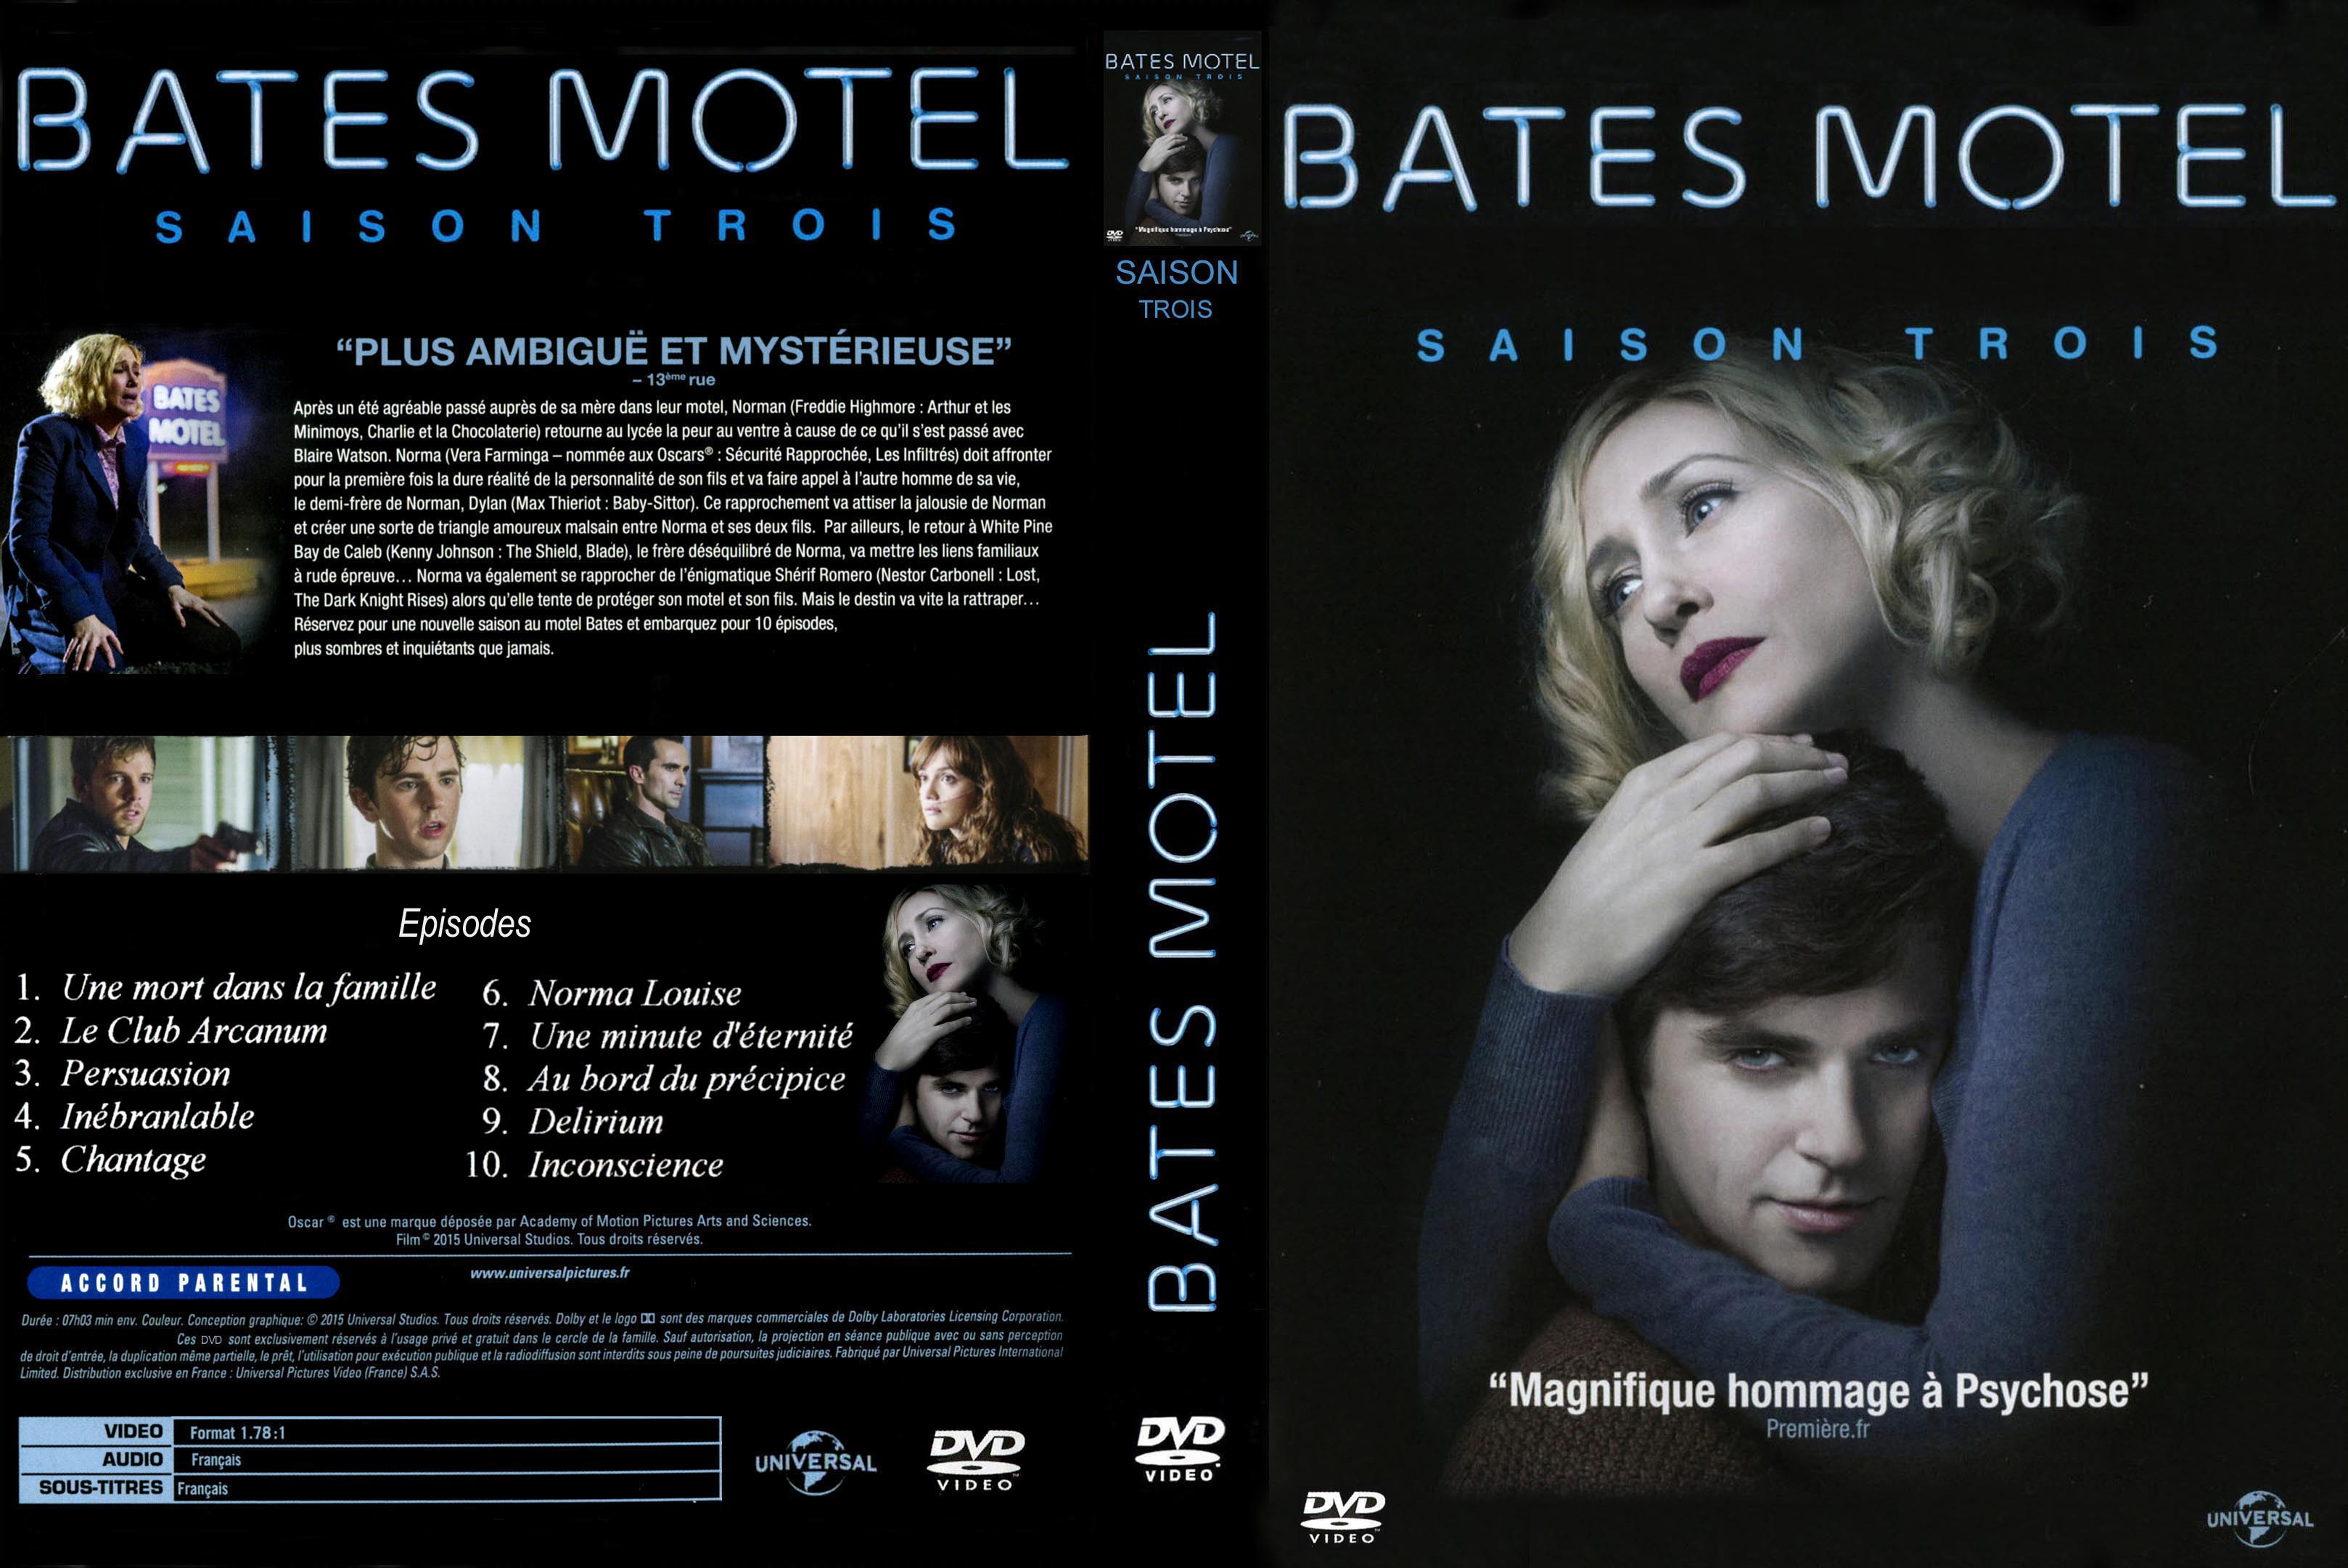 Jaquette DVD Bates motel Saison 3 custom